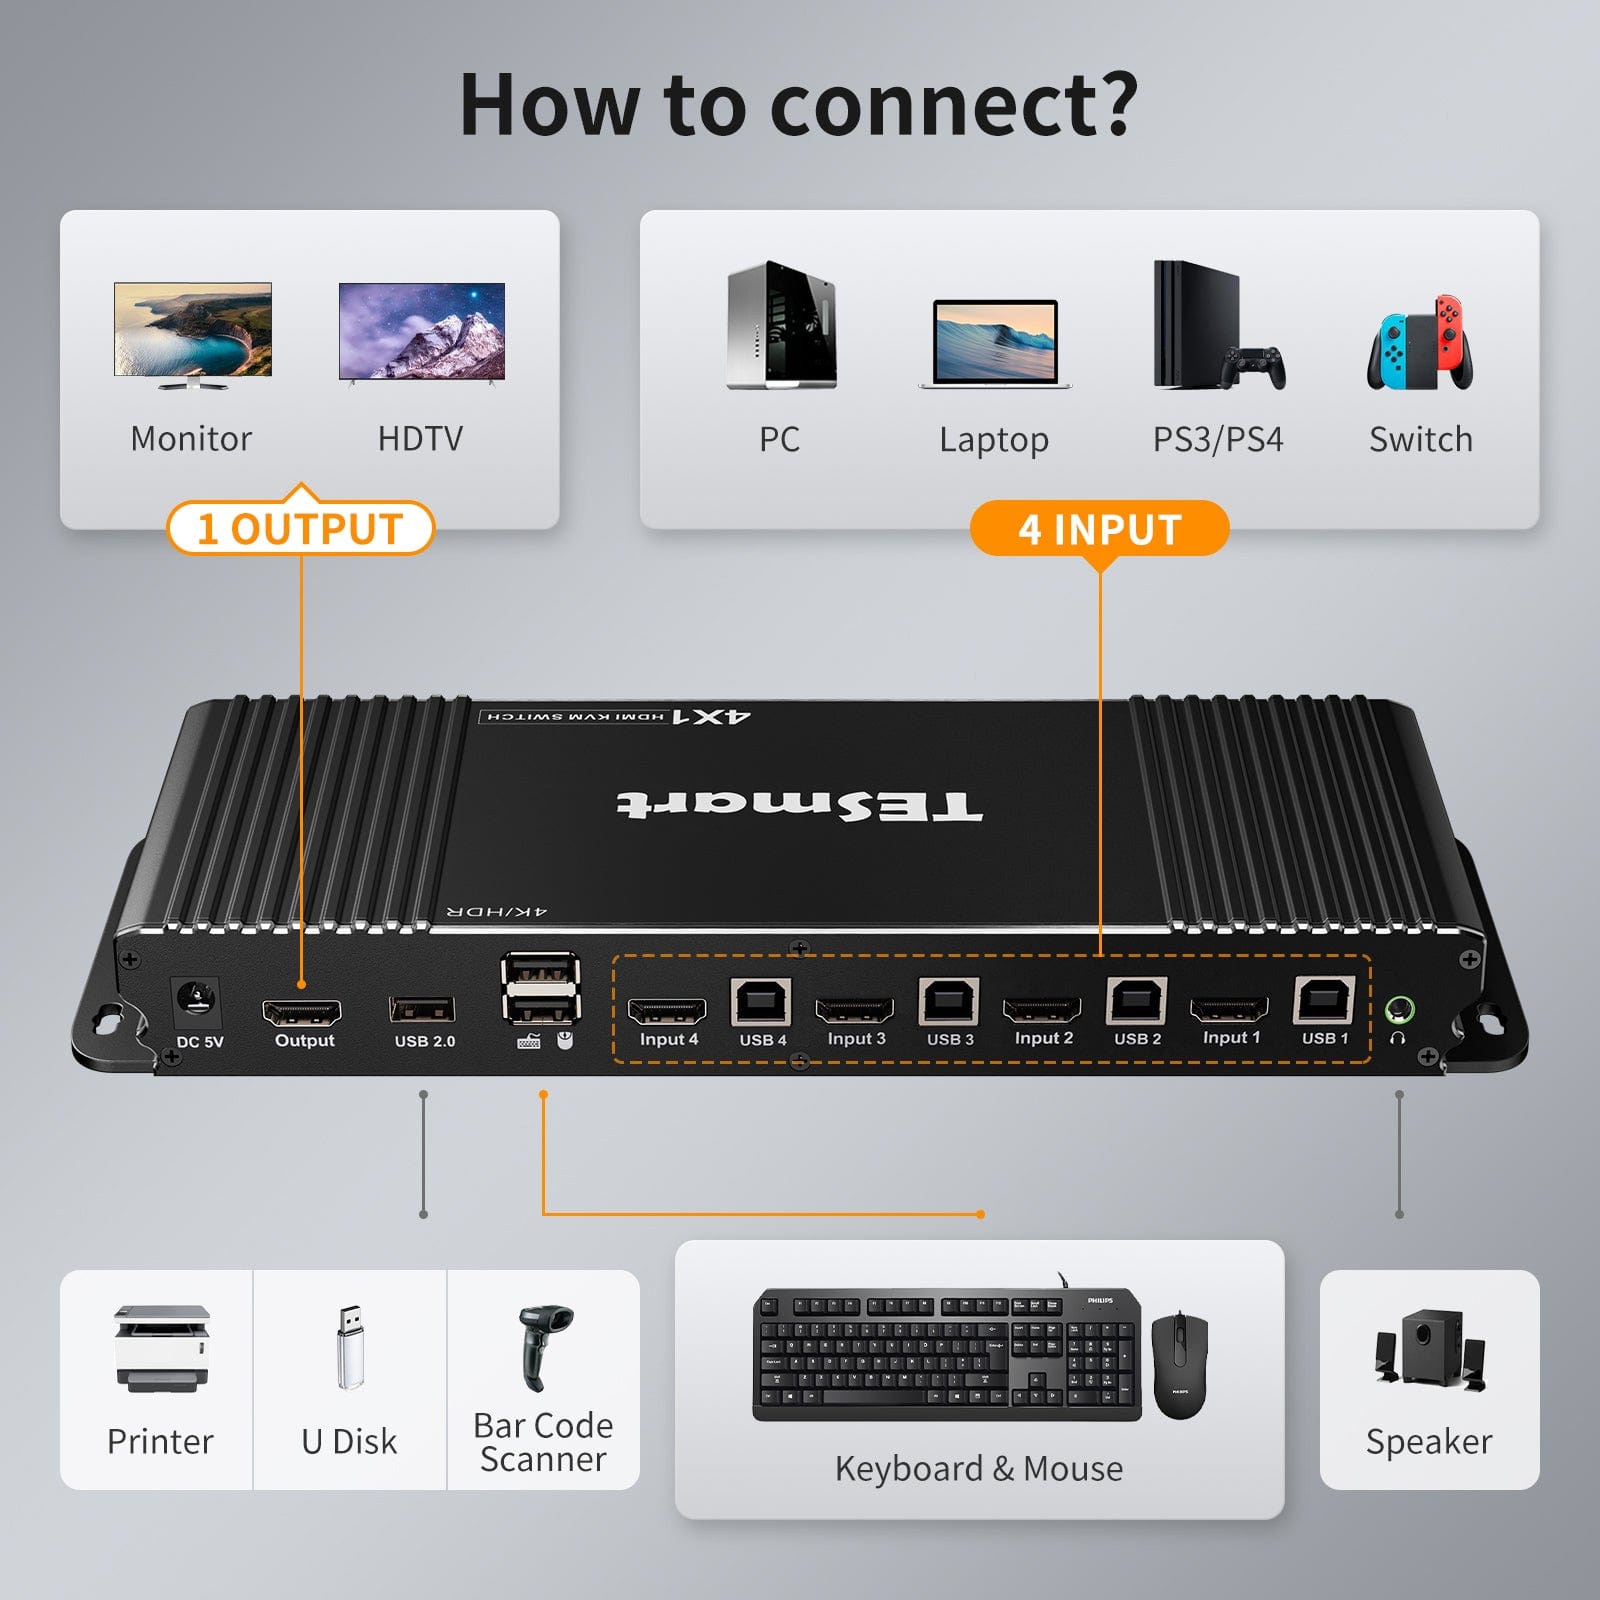 TESmart HDMI KVM Switcher 4 Port KVM Switch Kit HDMI 4K60Hz with EDID, 4 PCs 1 Monitor - B Series HDMI KVM switch 4K HDR connect 4 pc sharing USB, audio TESmart